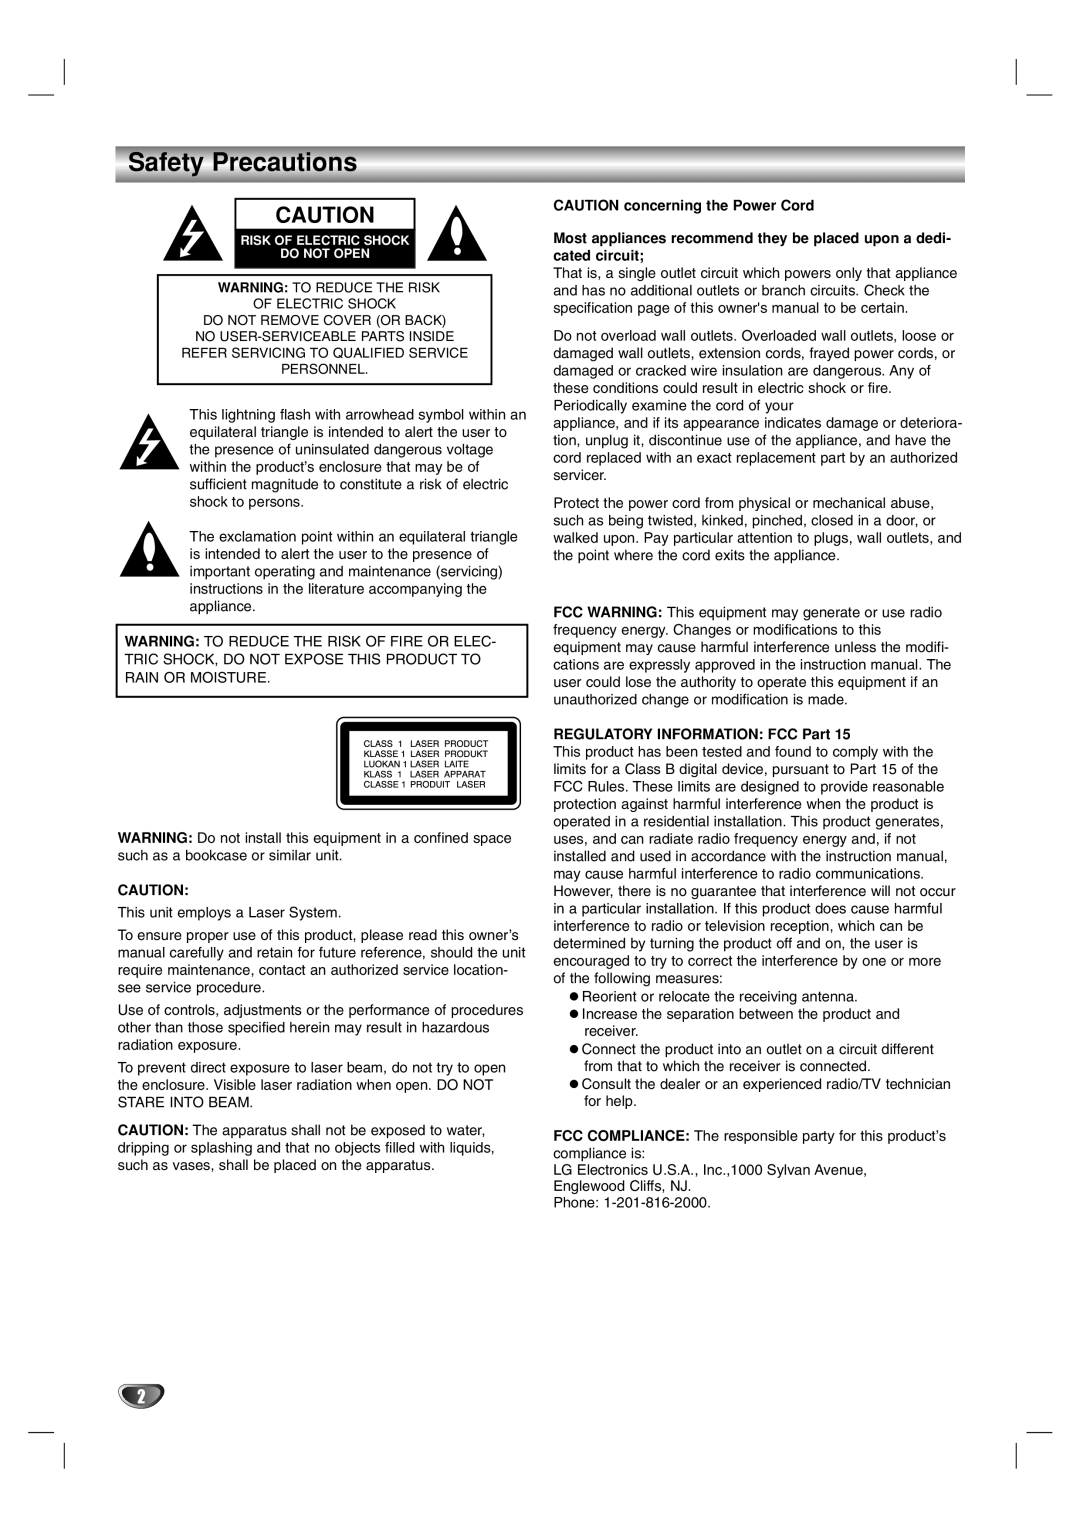 LG Electronics LF-D7150 Safety Precautions, CAUTION concerning the Power Cord, REGULATORY INFORMATION: FCC Part 